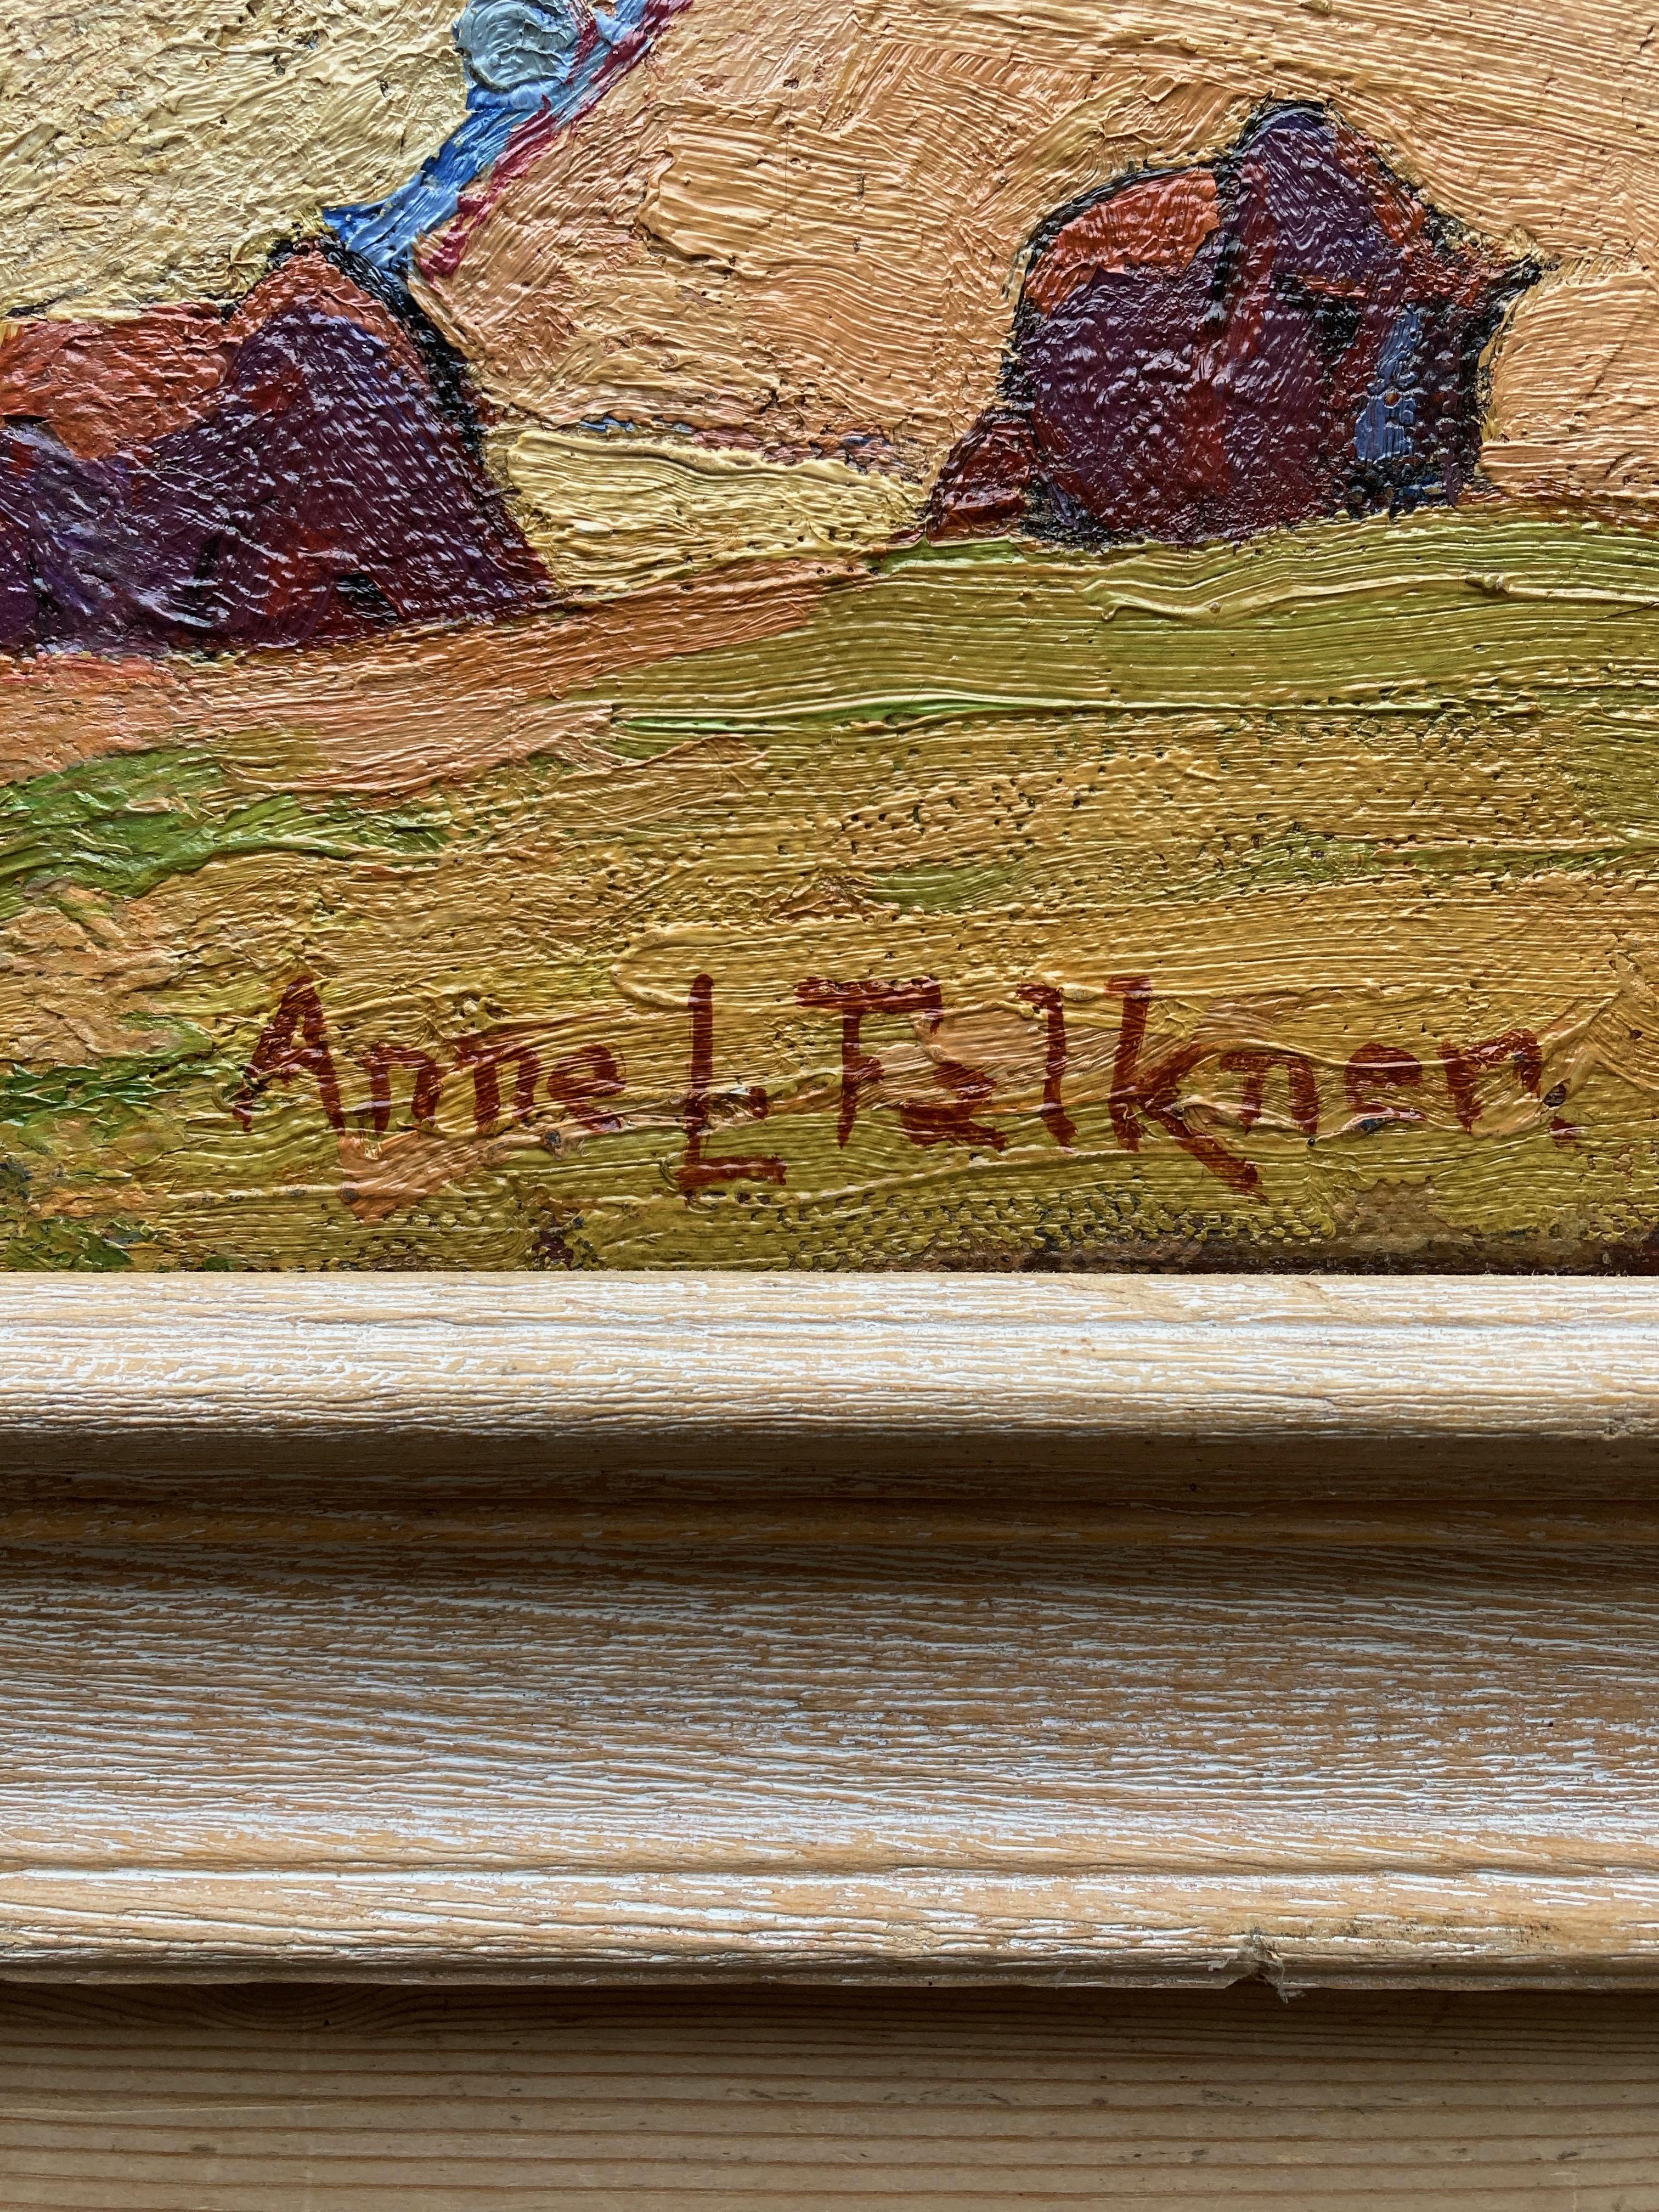 Anne Louise Falkner, British Impressionist, Female artist, horses on a hillside 2